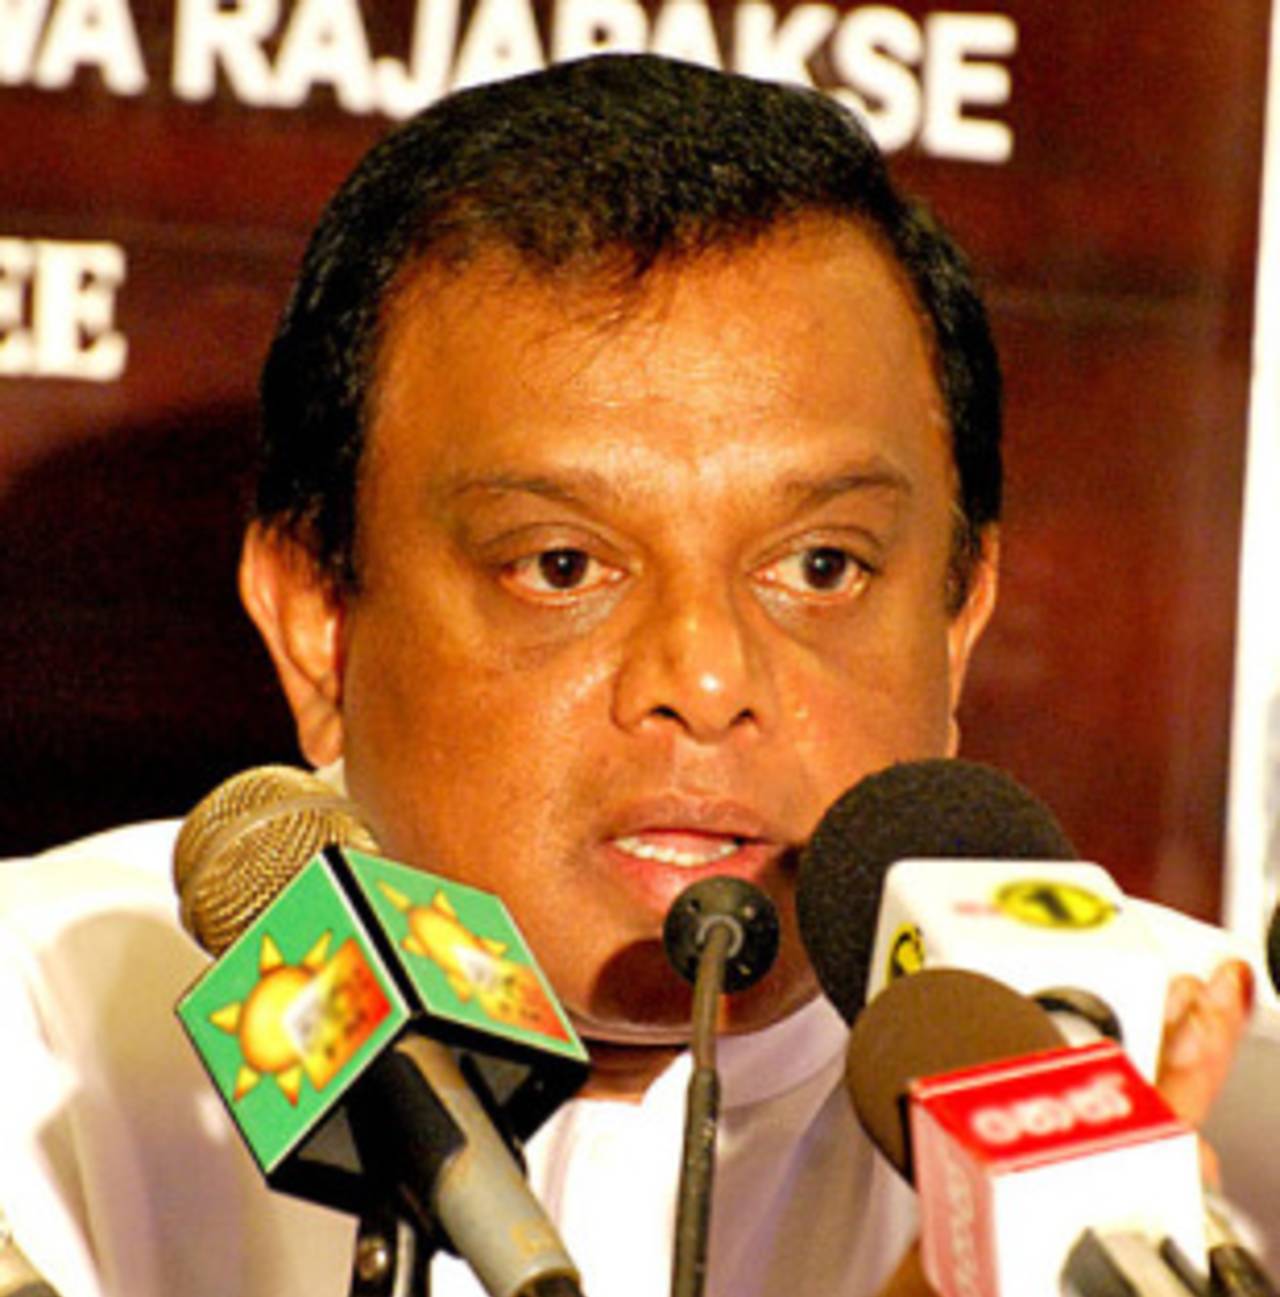 Sri Lanka's sports minister Chandrasiri Bandara Ratnayake speaks to the media, Colombo, May 31, 2010